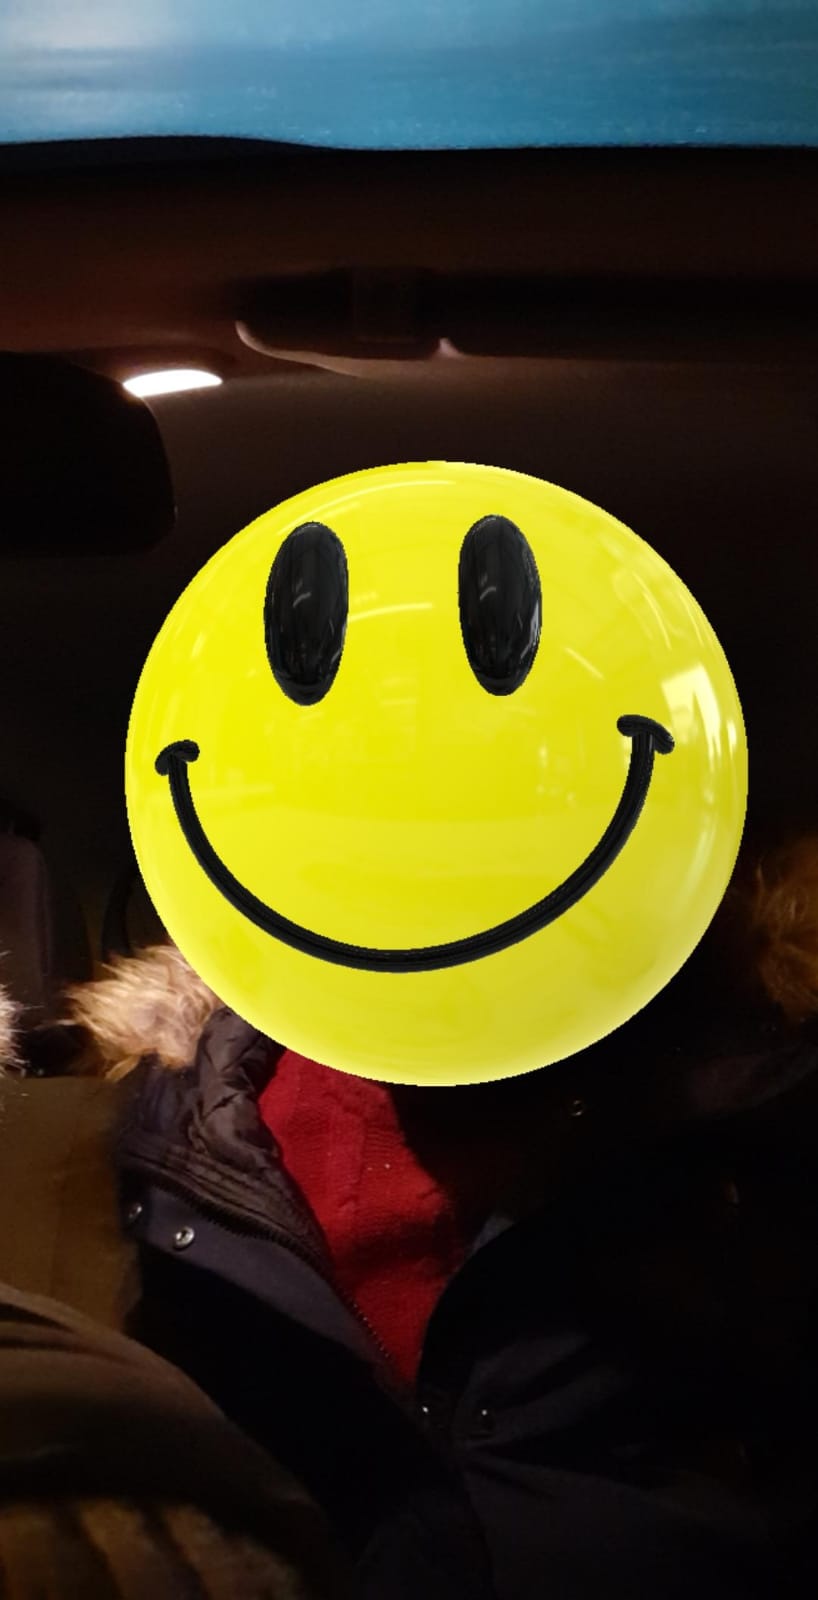 wrld.space helmet (Smile Emoticon)